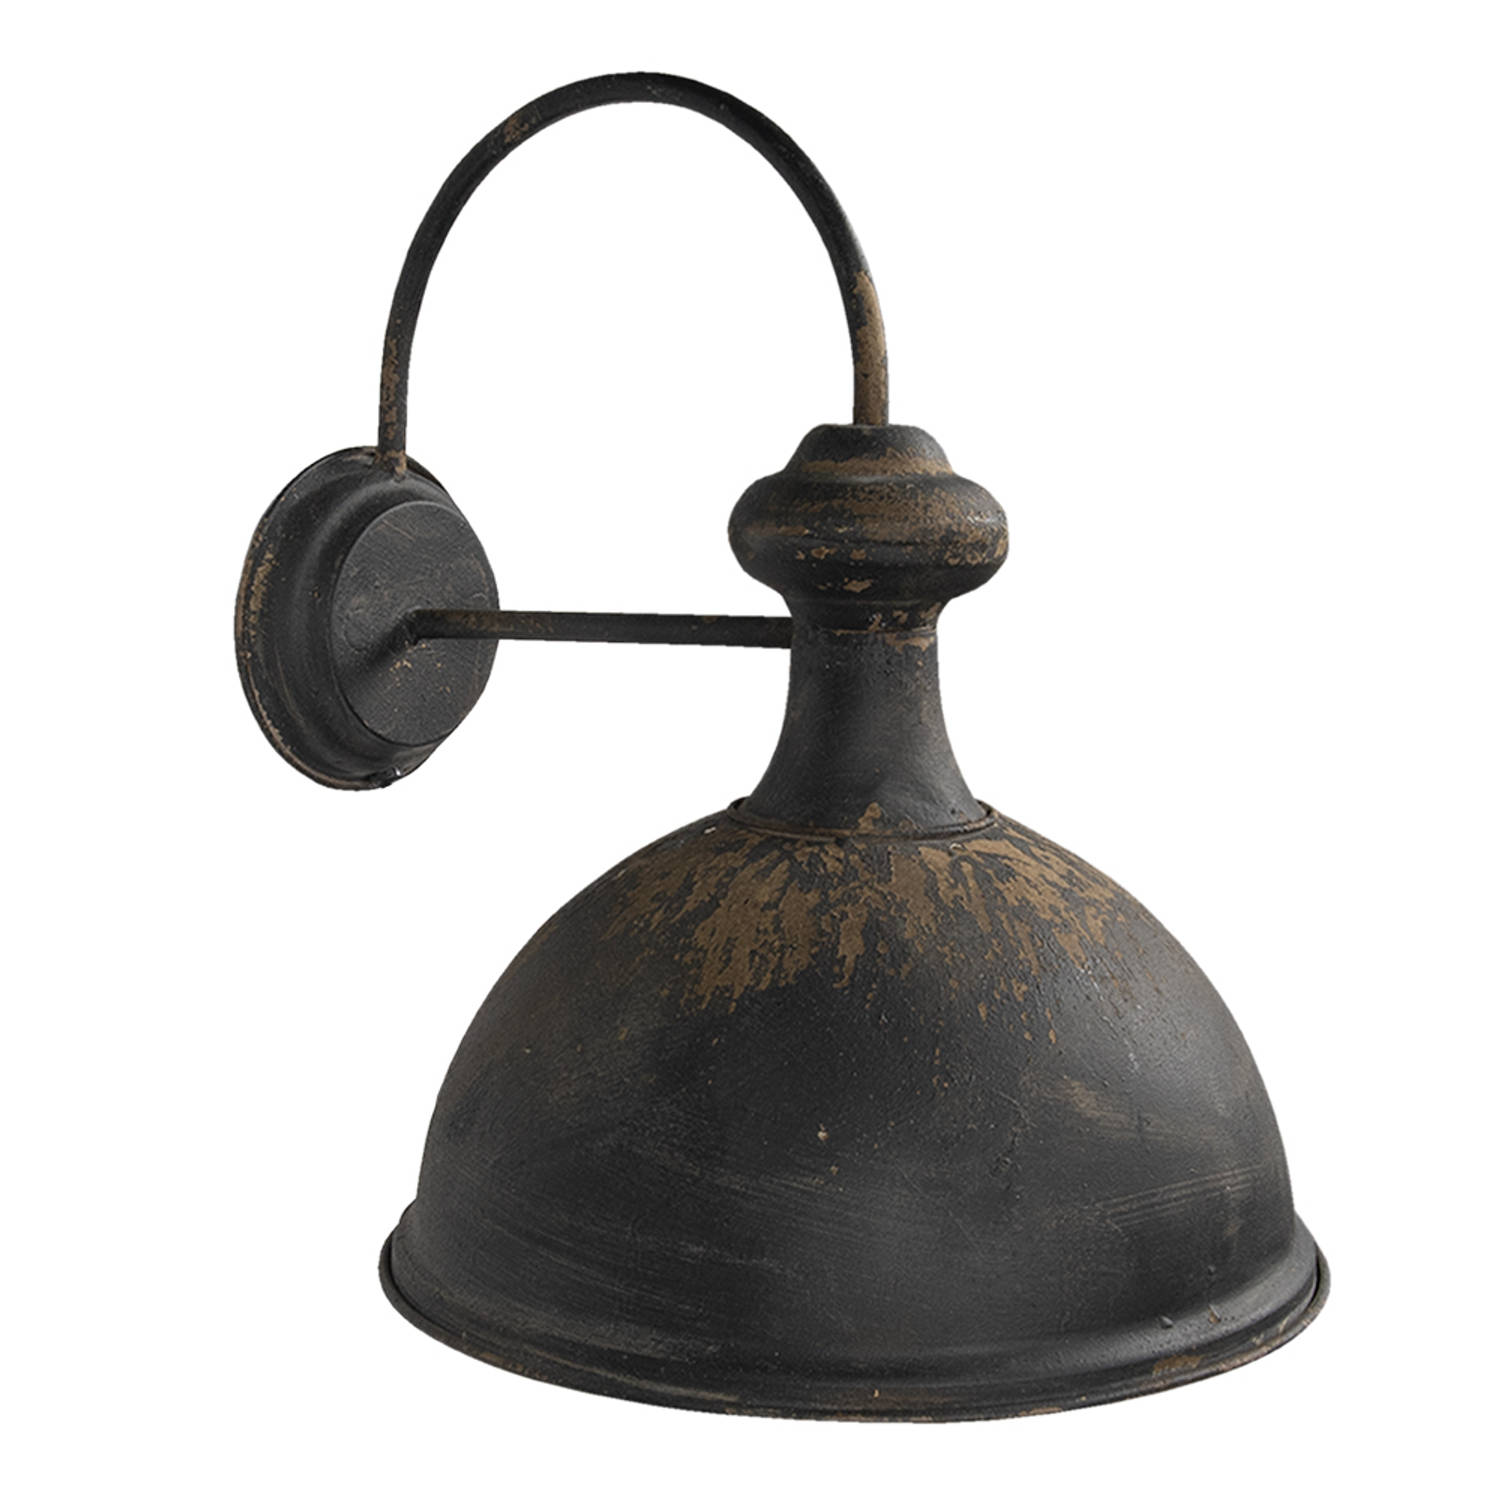 HAES DECO - Wandlamp - Industrial - Vintage / Retro Lamp, formaat 43x35x44 cm - Bruin Metaal - Ronde Muurlamp, Sfeerlamp